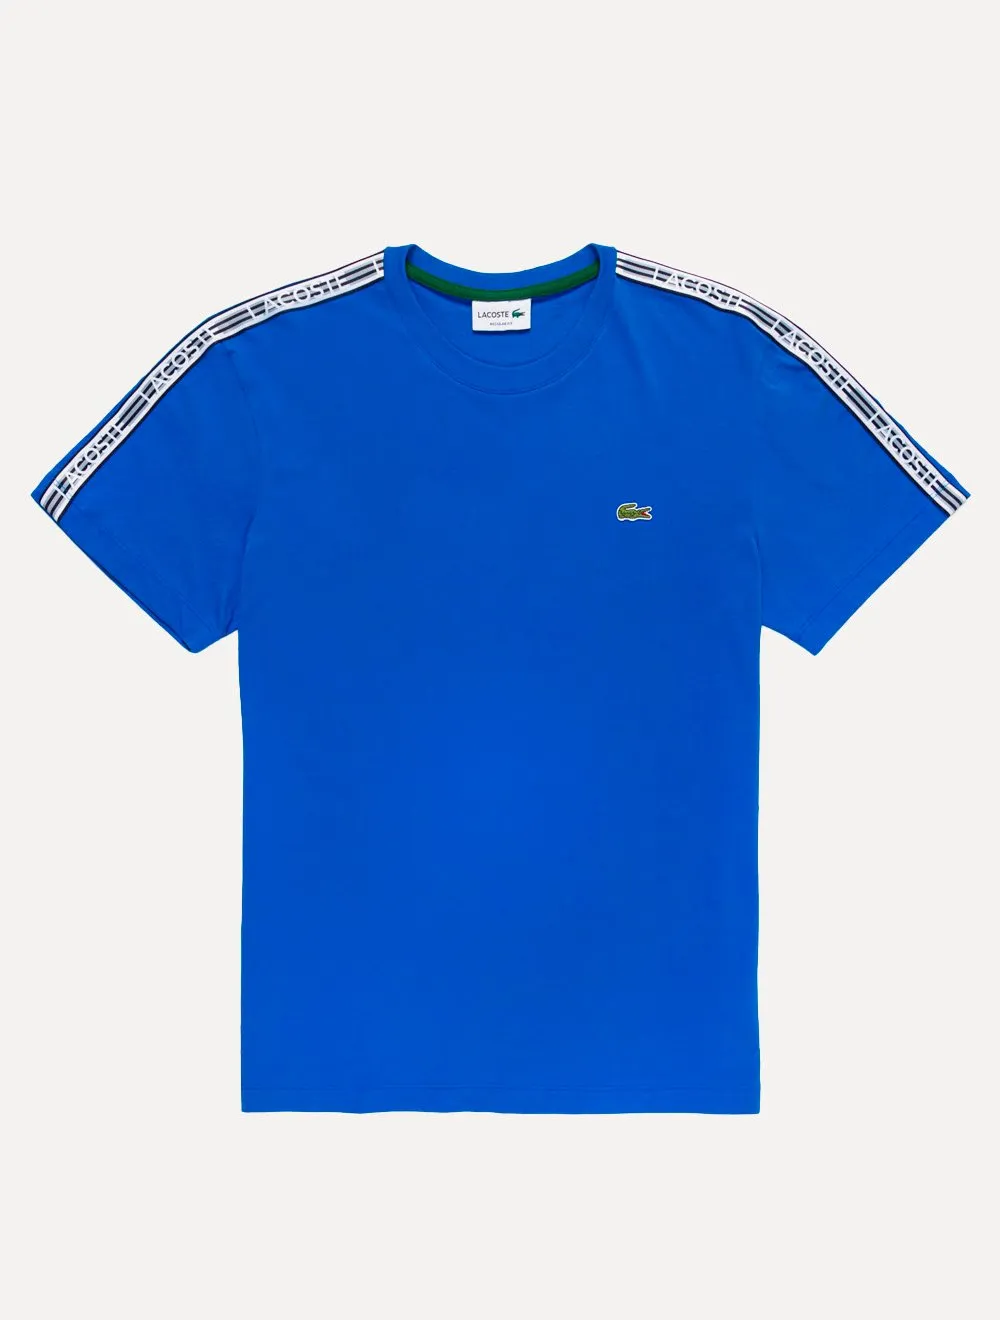 Camiseta Lacoste Masculina Regular Fit Listrada Logo Azul